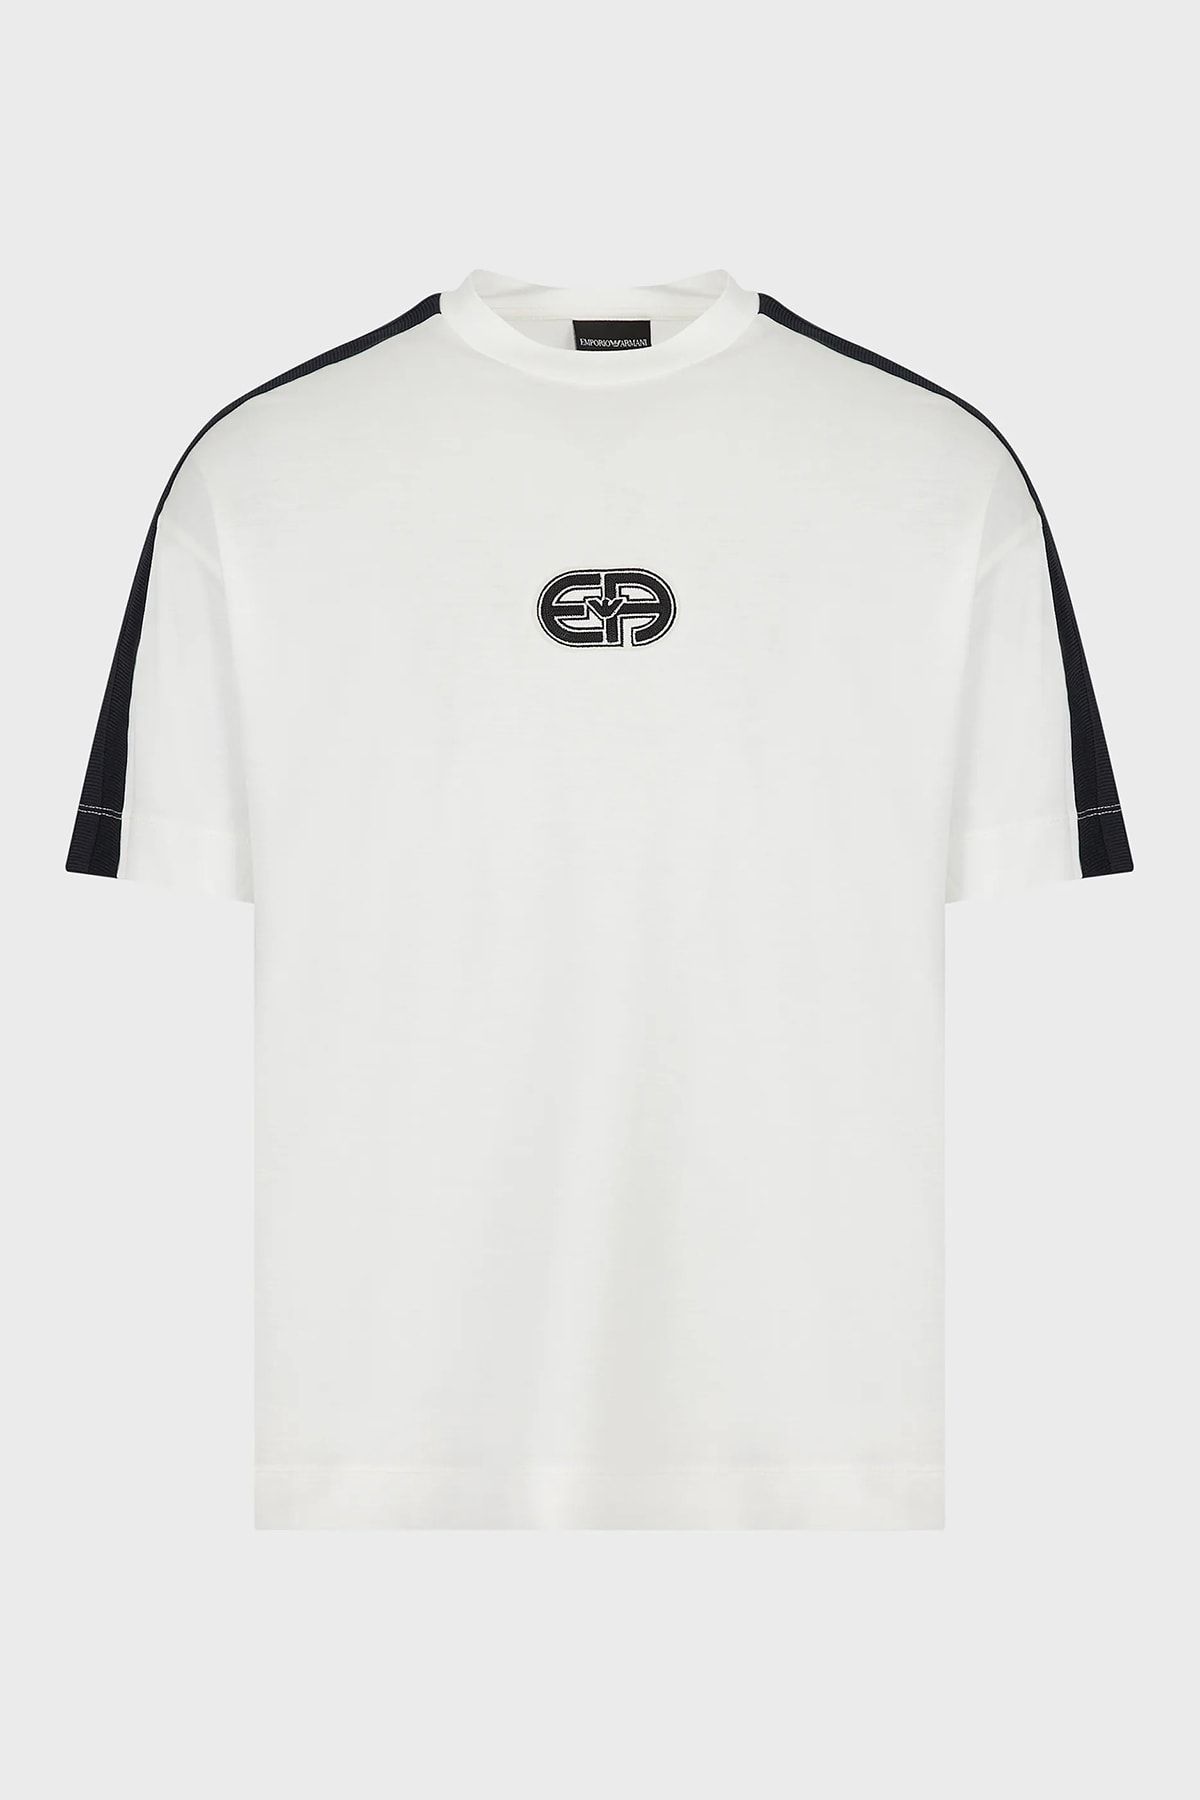 Emporio Armani Logolu Pamuk Karışımlı Bisiklet Yaka Relaxed Fit T Shirt Erkek T Shirt 3r1tt6 1juvz 0